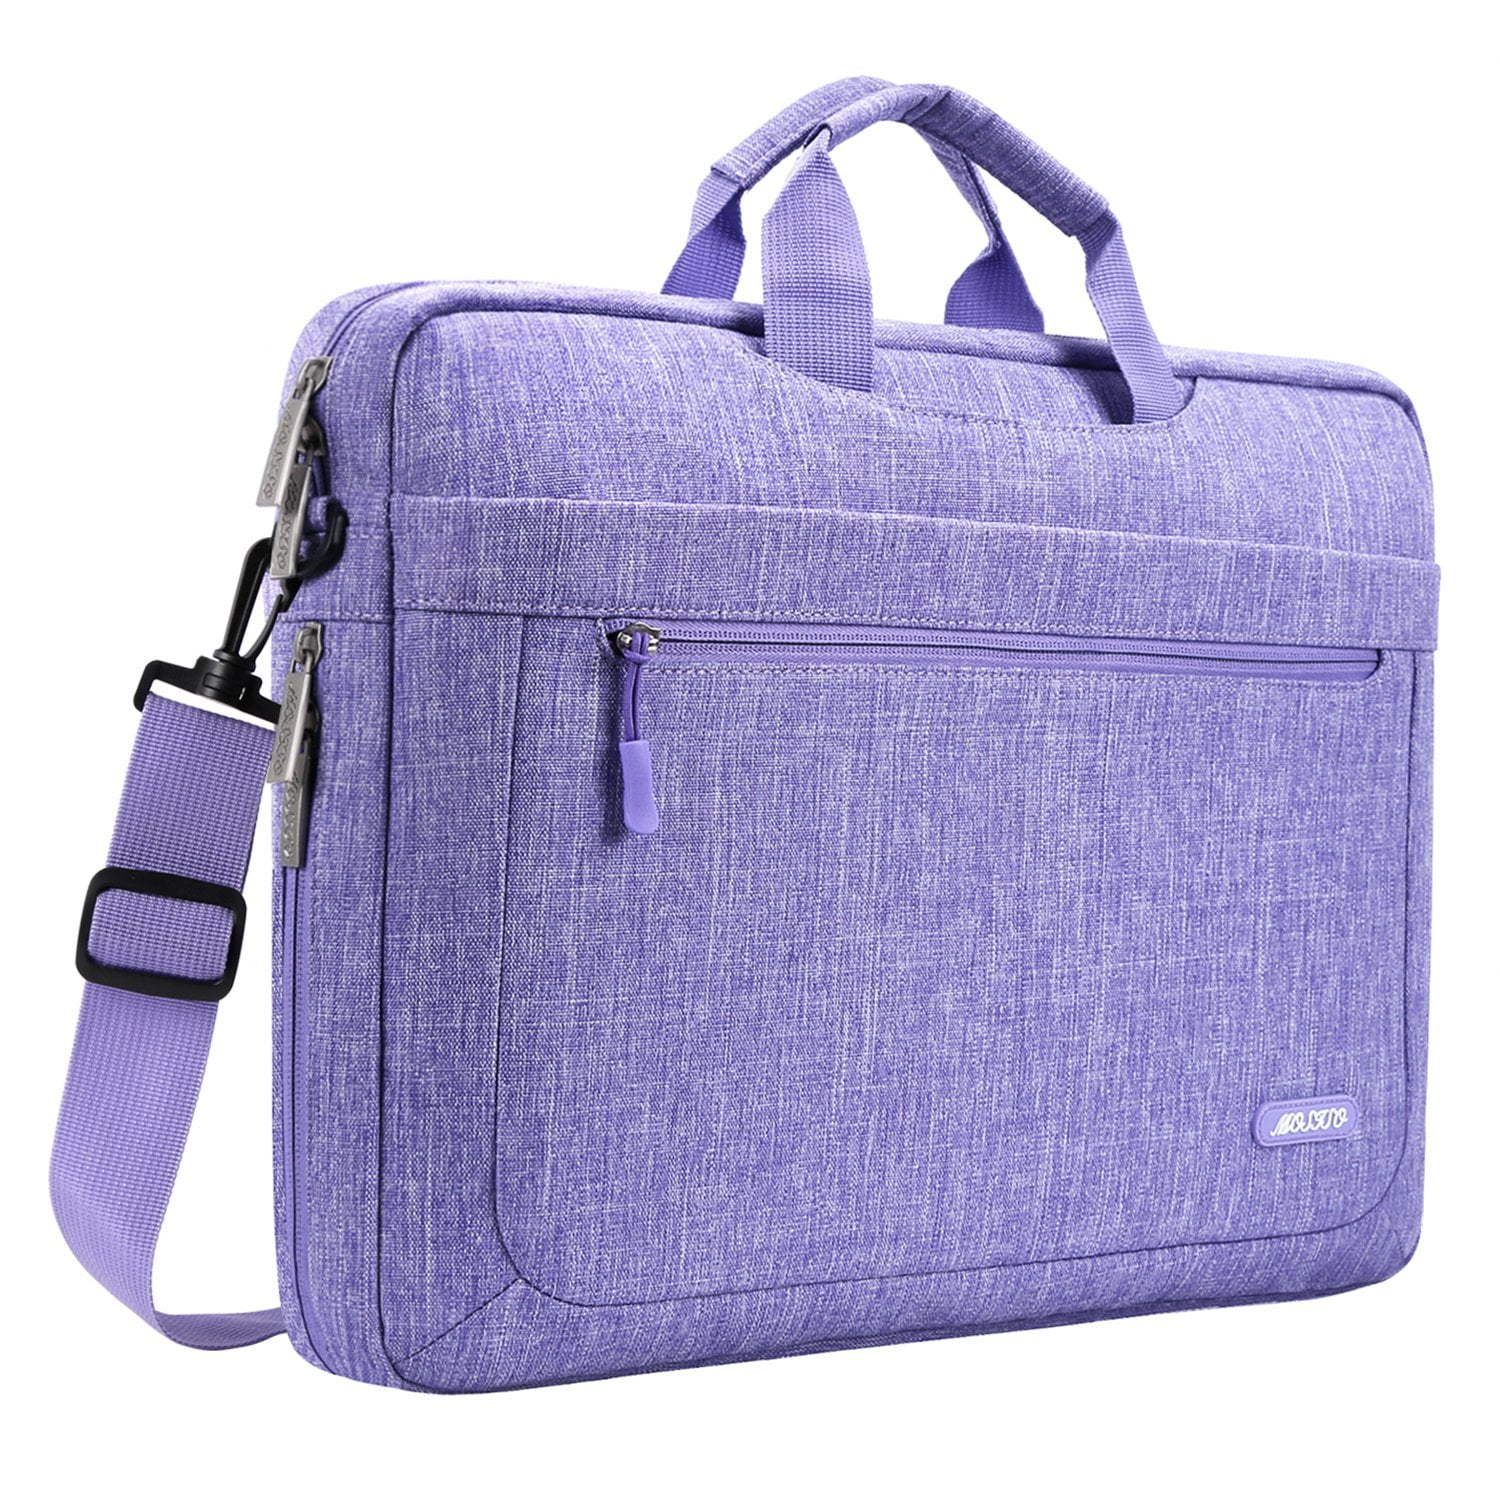 imobaby Laptop Bag Water Drops On Leave Messenger Shoulder Bag Briefcase Notebook Sleeve Carrying Handbag 15-15.4 inches